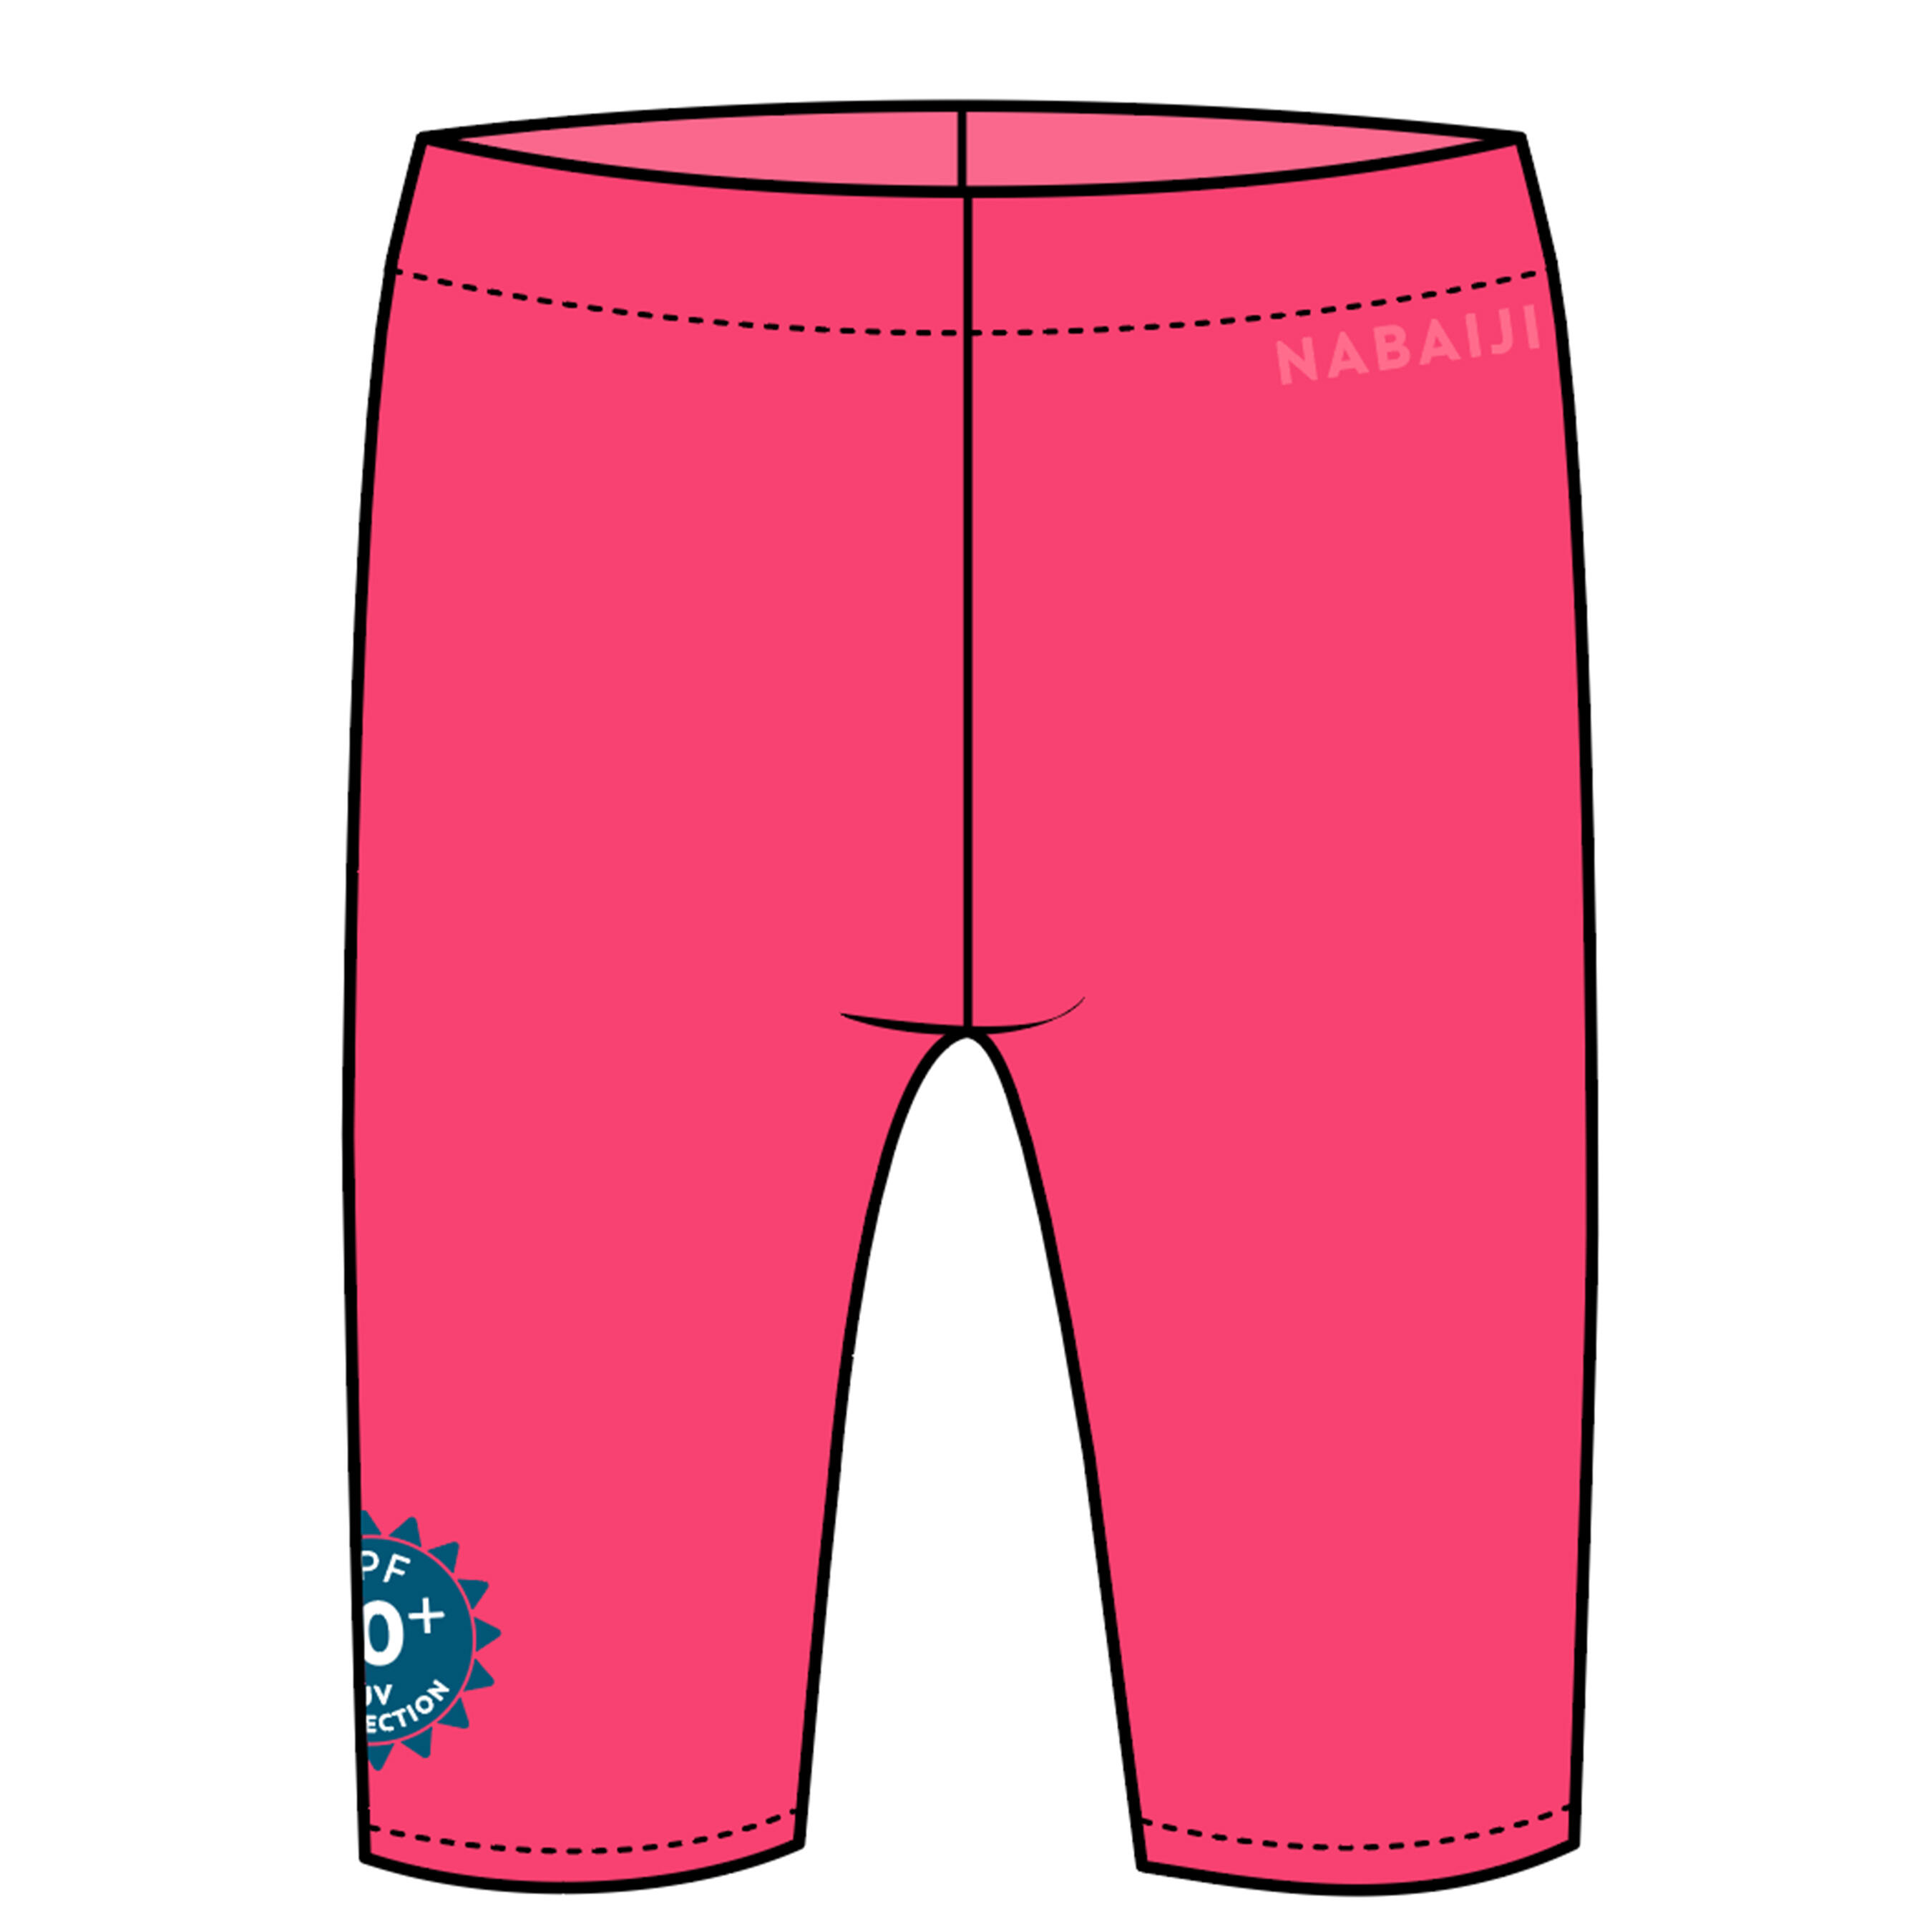 NABAIJI Baby / Kids' UV-Protection Short Swimsuit Bottoms - Pink